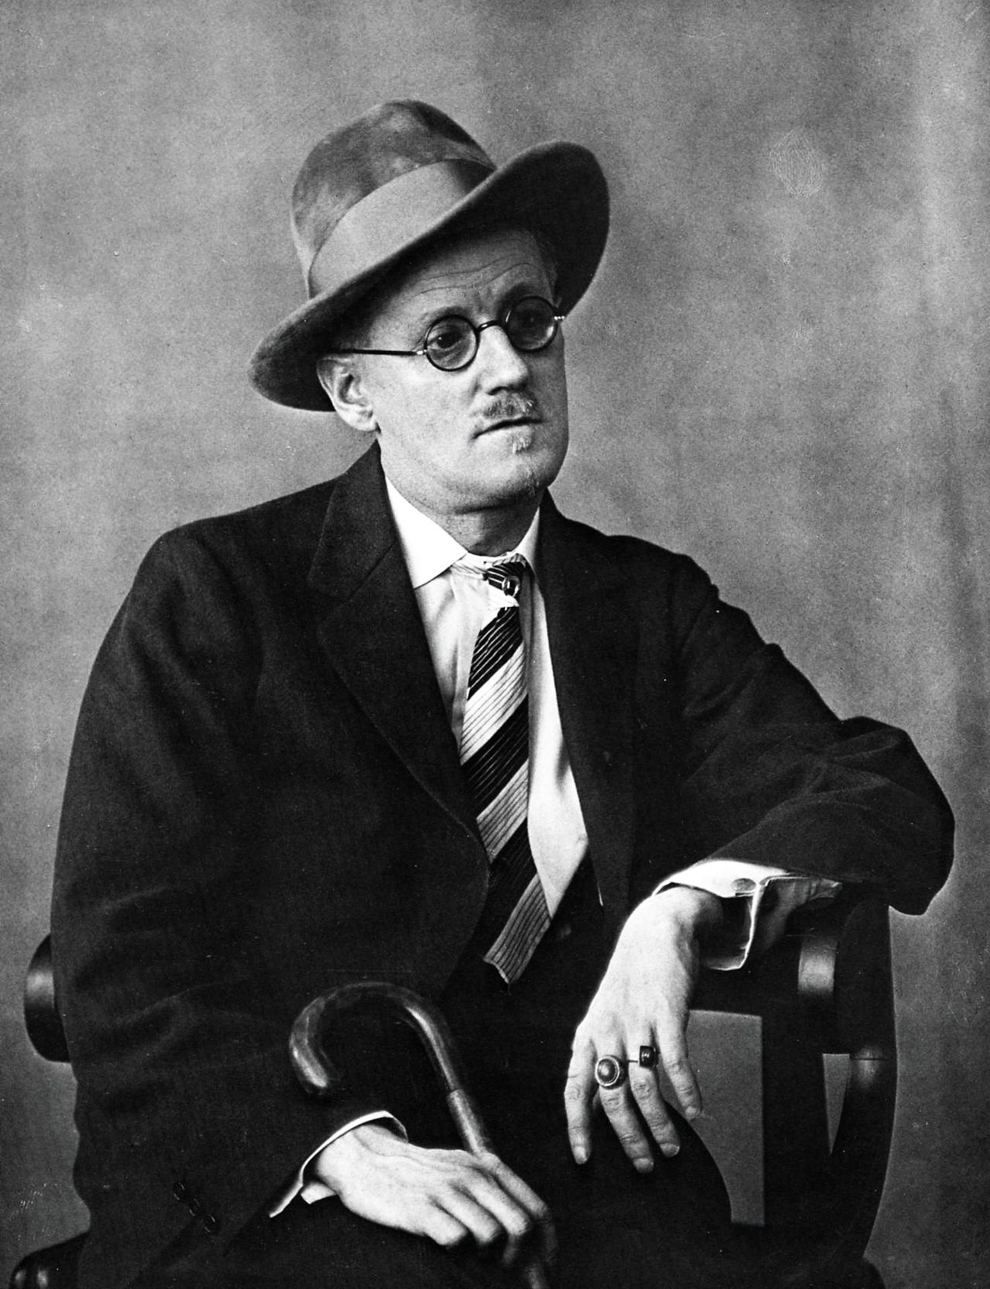 James Joyce by Berenice Abbott